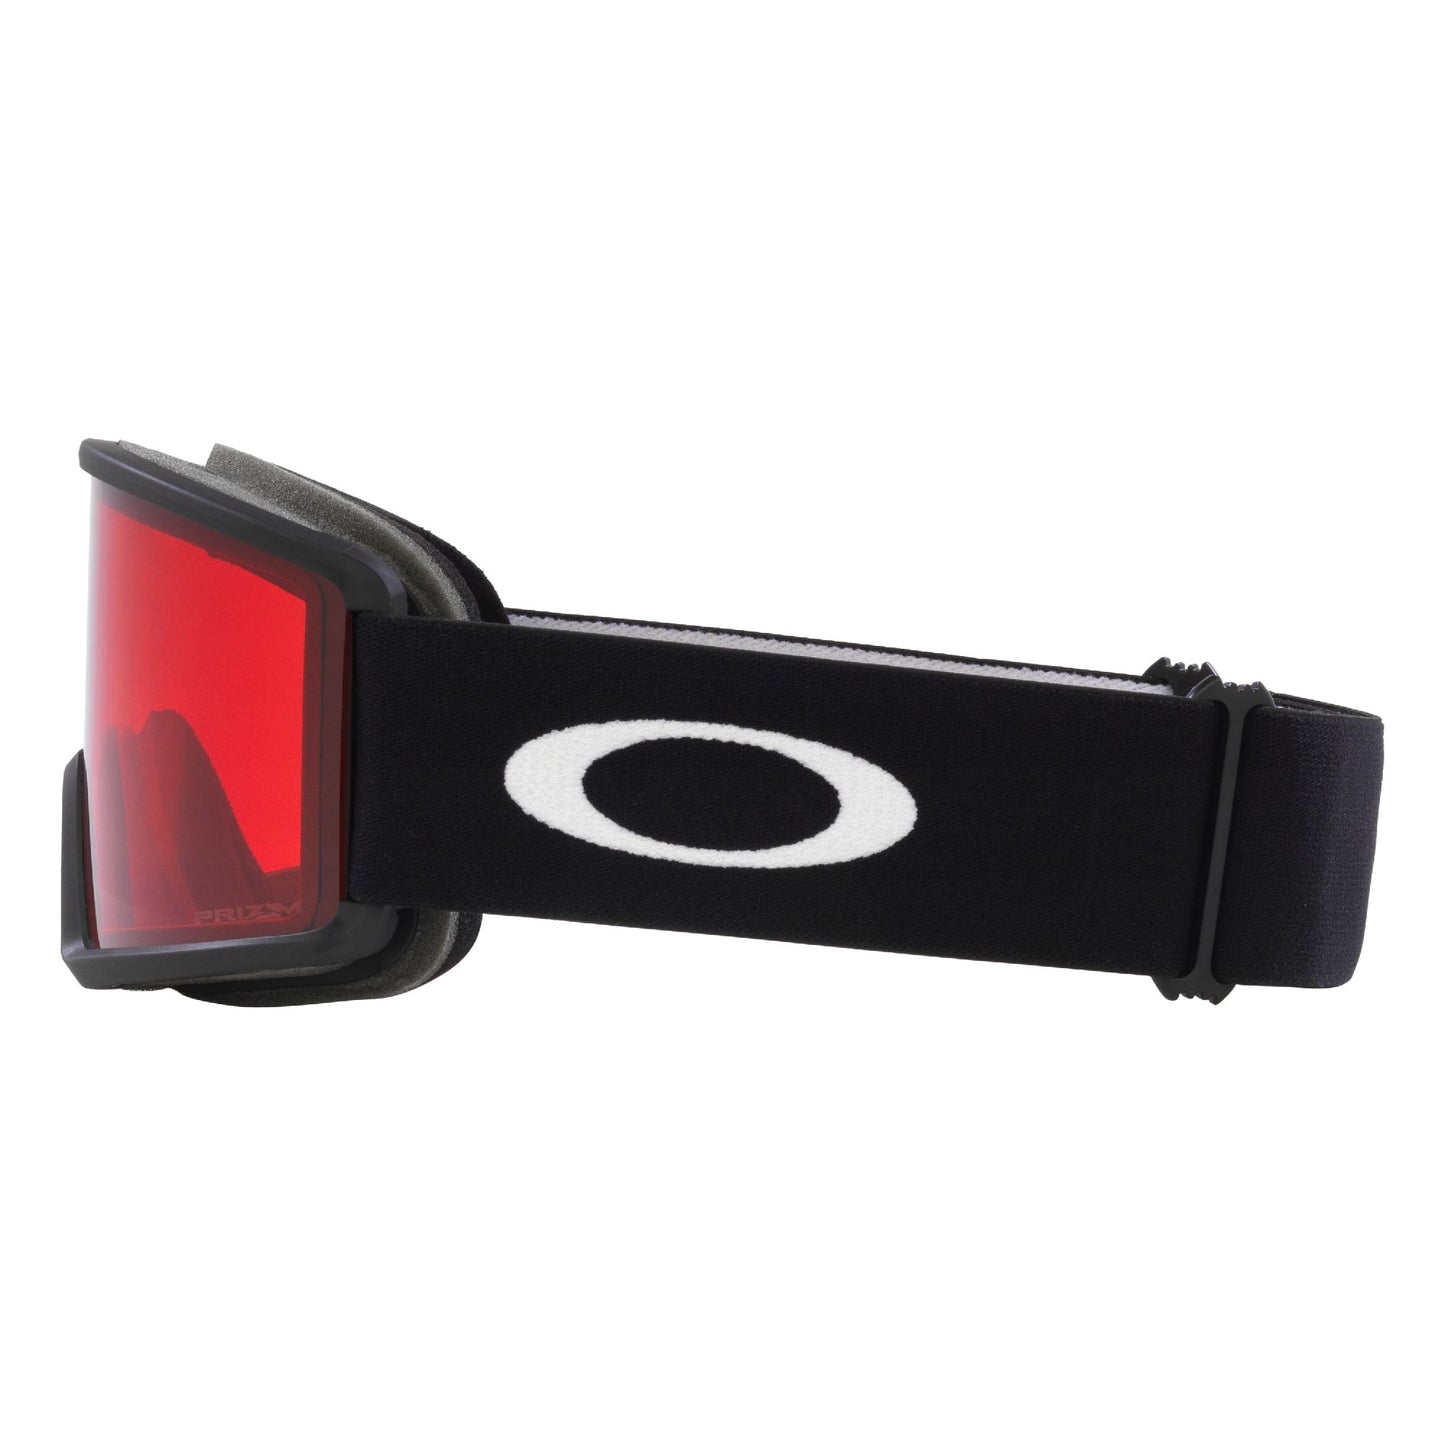 Oakley Target Line L Snow Goggles Matte Black / Prizm Rose Snow Goggles